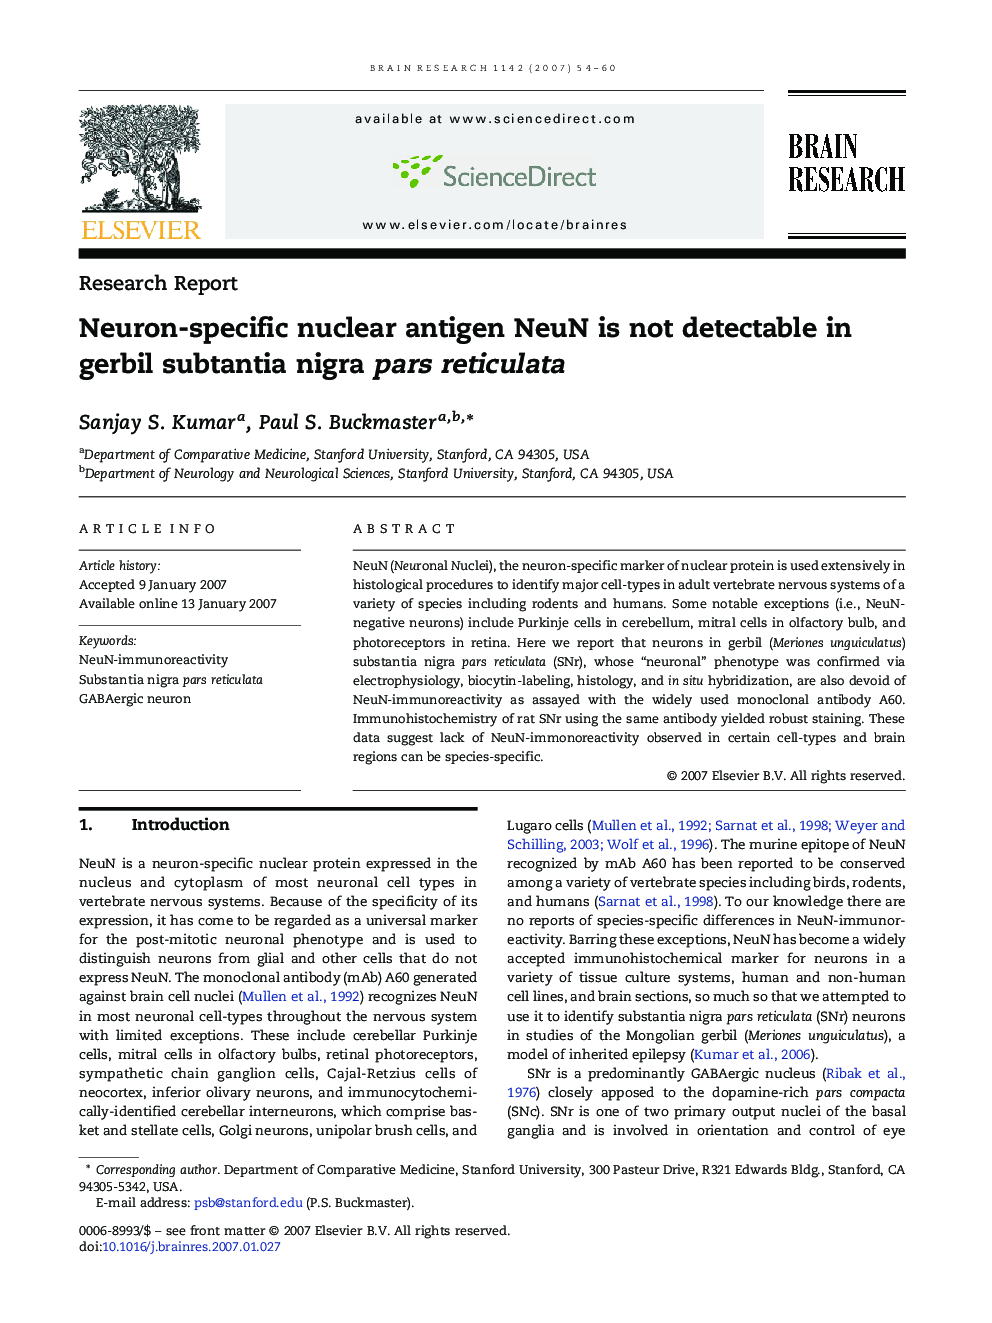 Neuron-specific nuclear antigen NeuN is not detectable in gerbil subtantia nigra pars reticulata